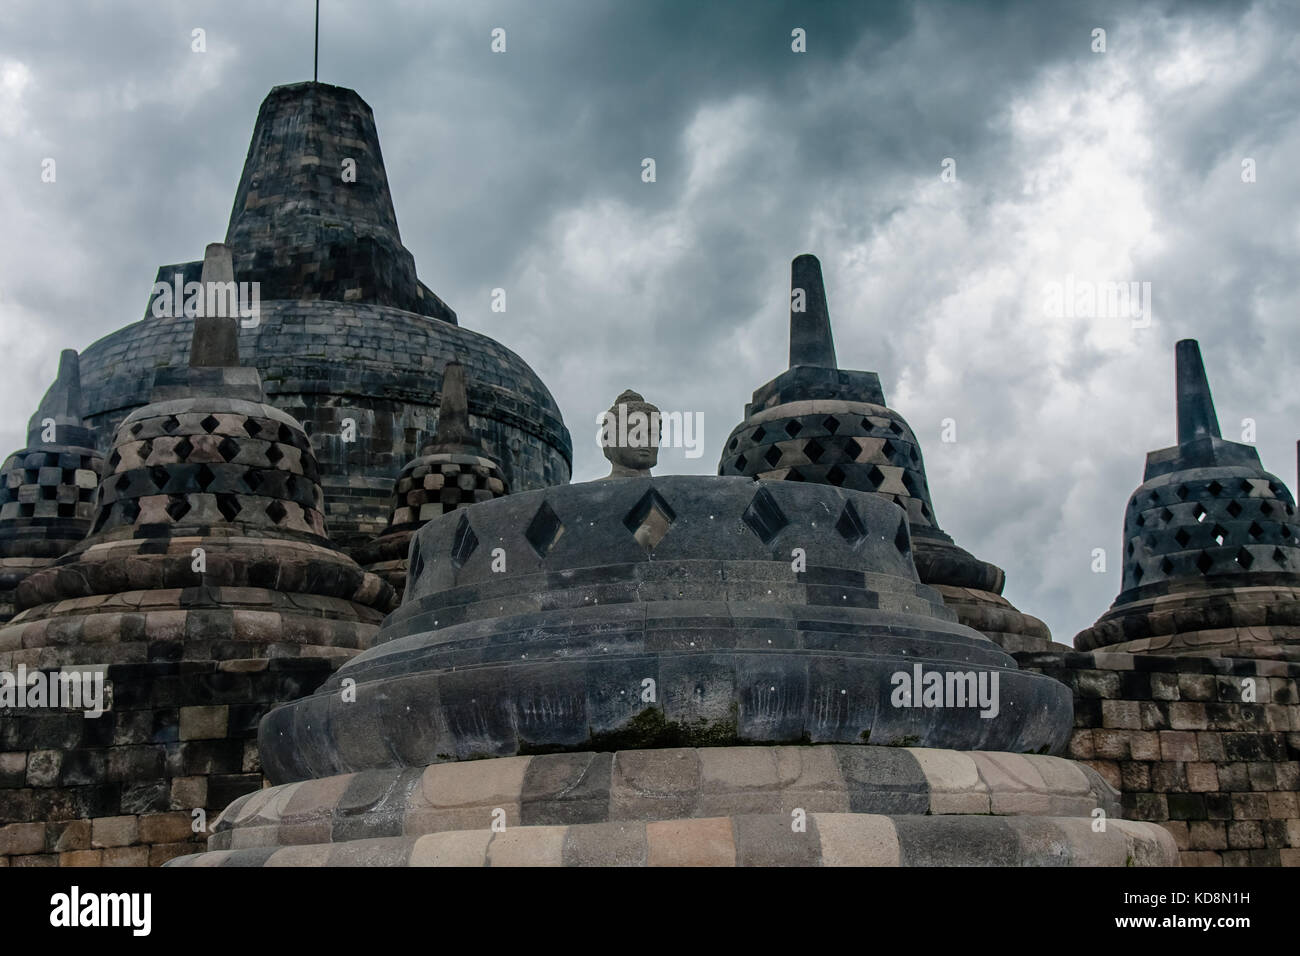 The perforated stupas on the top of the Borobudur Temple, Yogyakarta, Indonesia Stock Photo